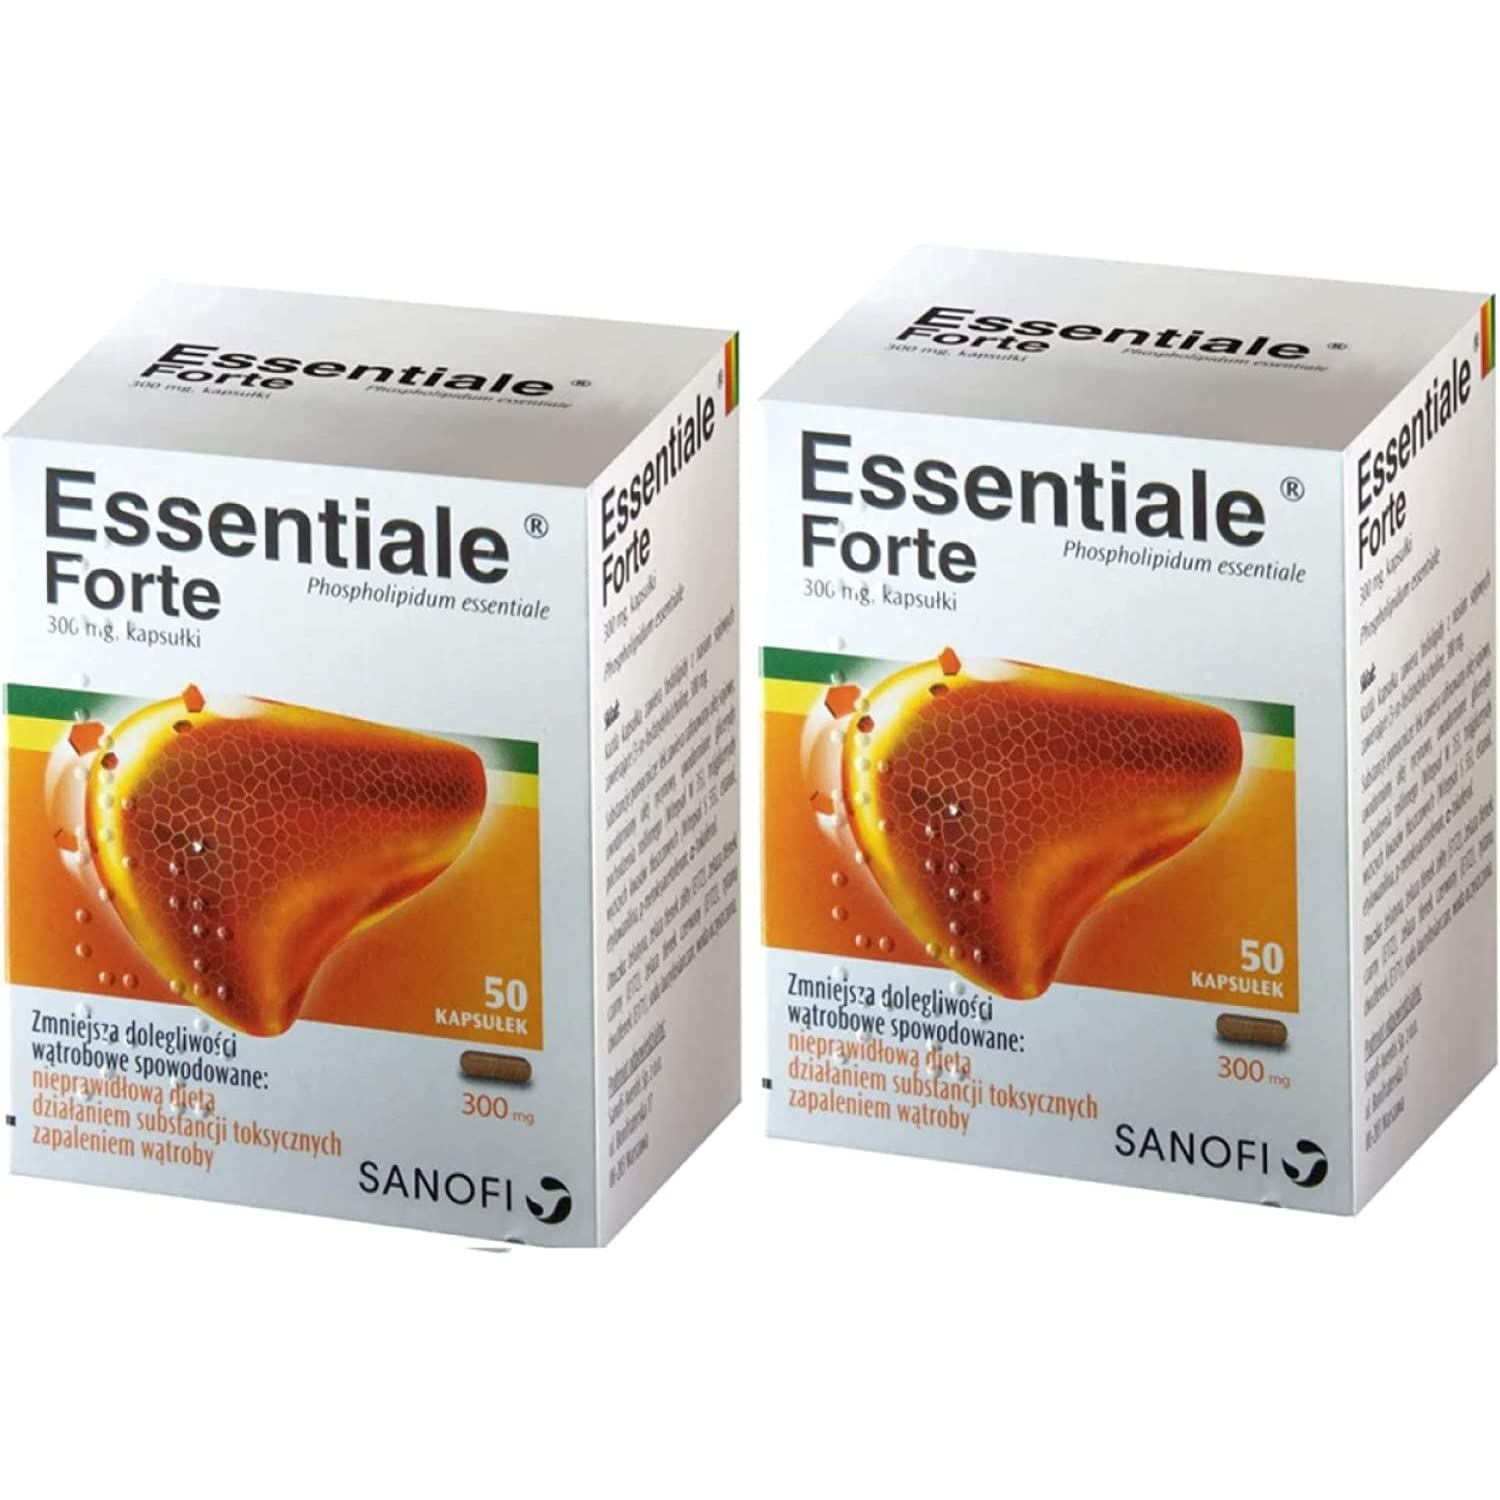 Essentiale Forte 100 Capsules Liver Detox Cleanse Support Regeneration Treatment